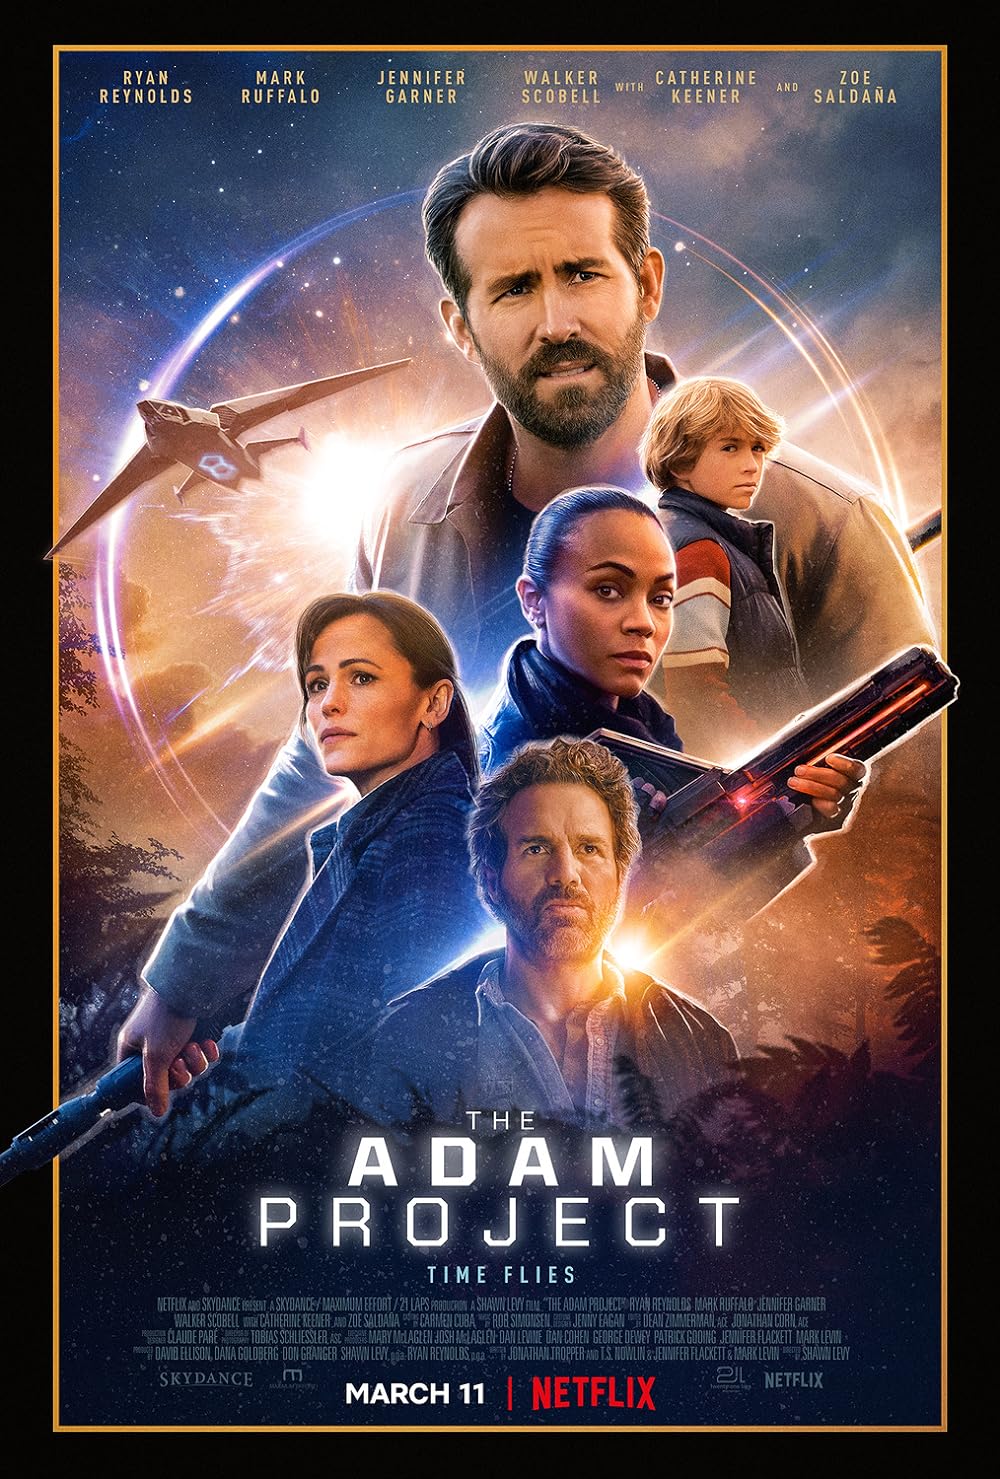 The Adam Project sci-fi movies on Netflix